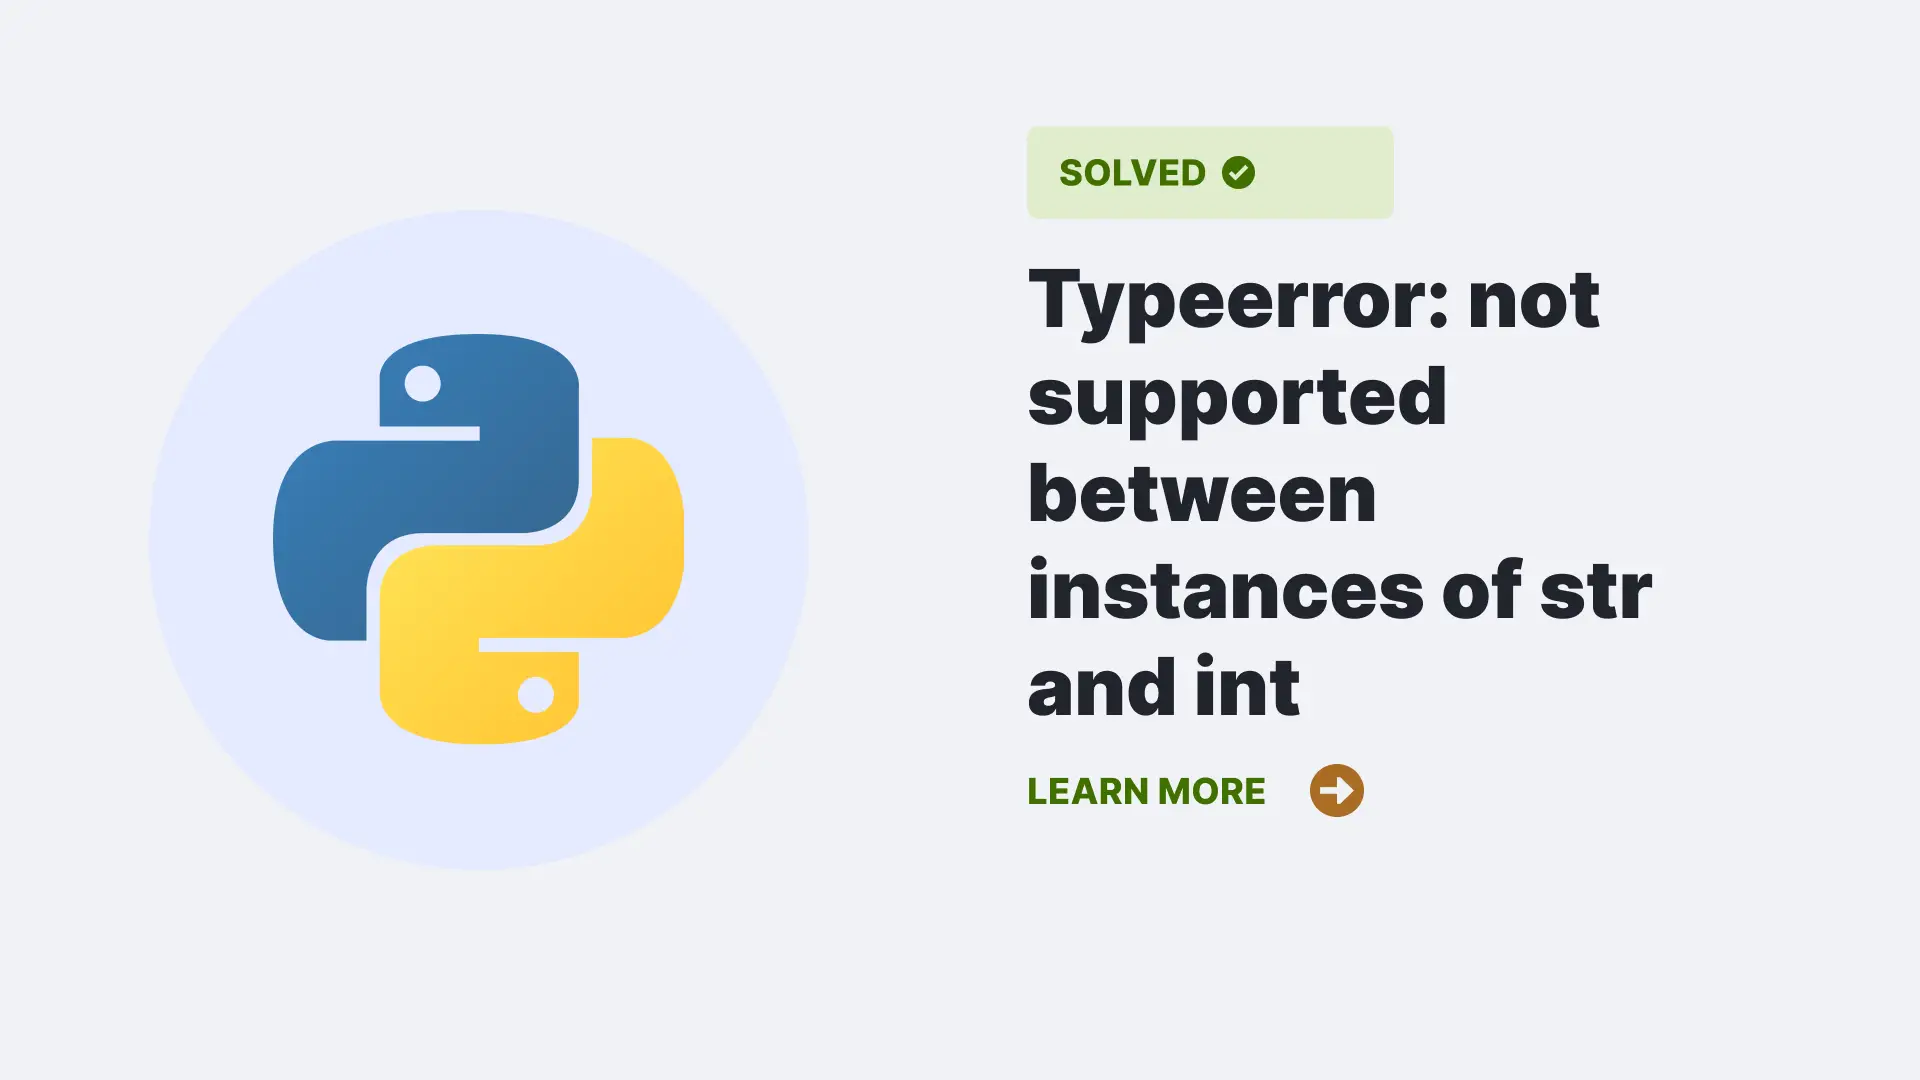 Typeerror: not supported between instances of str and int